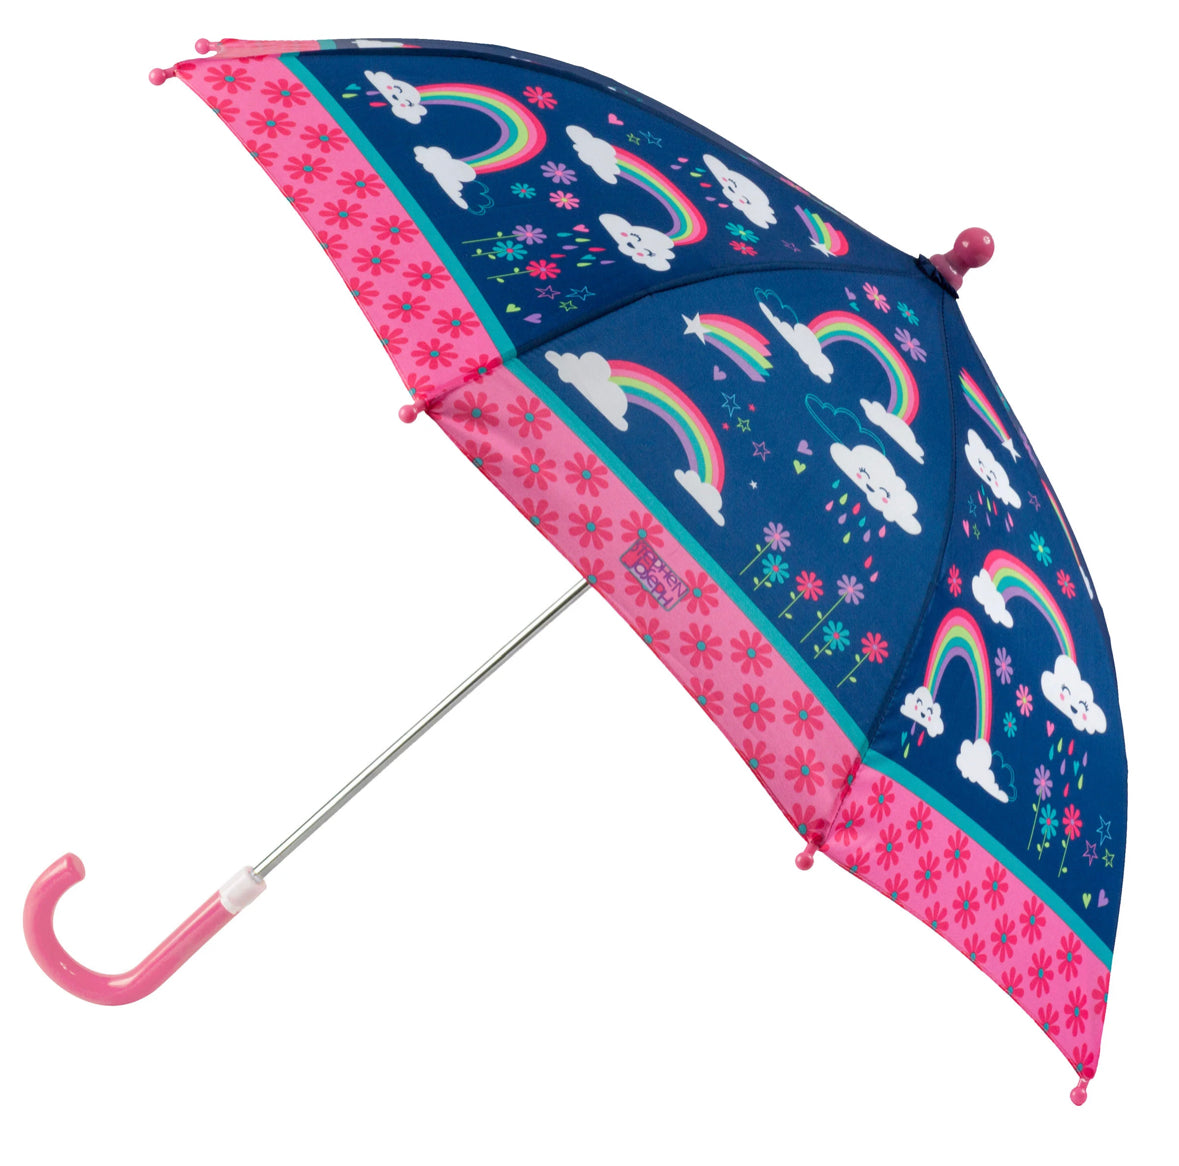 A Stephen Joseph Blue Rainbow umbrella, perfect for rainy days.